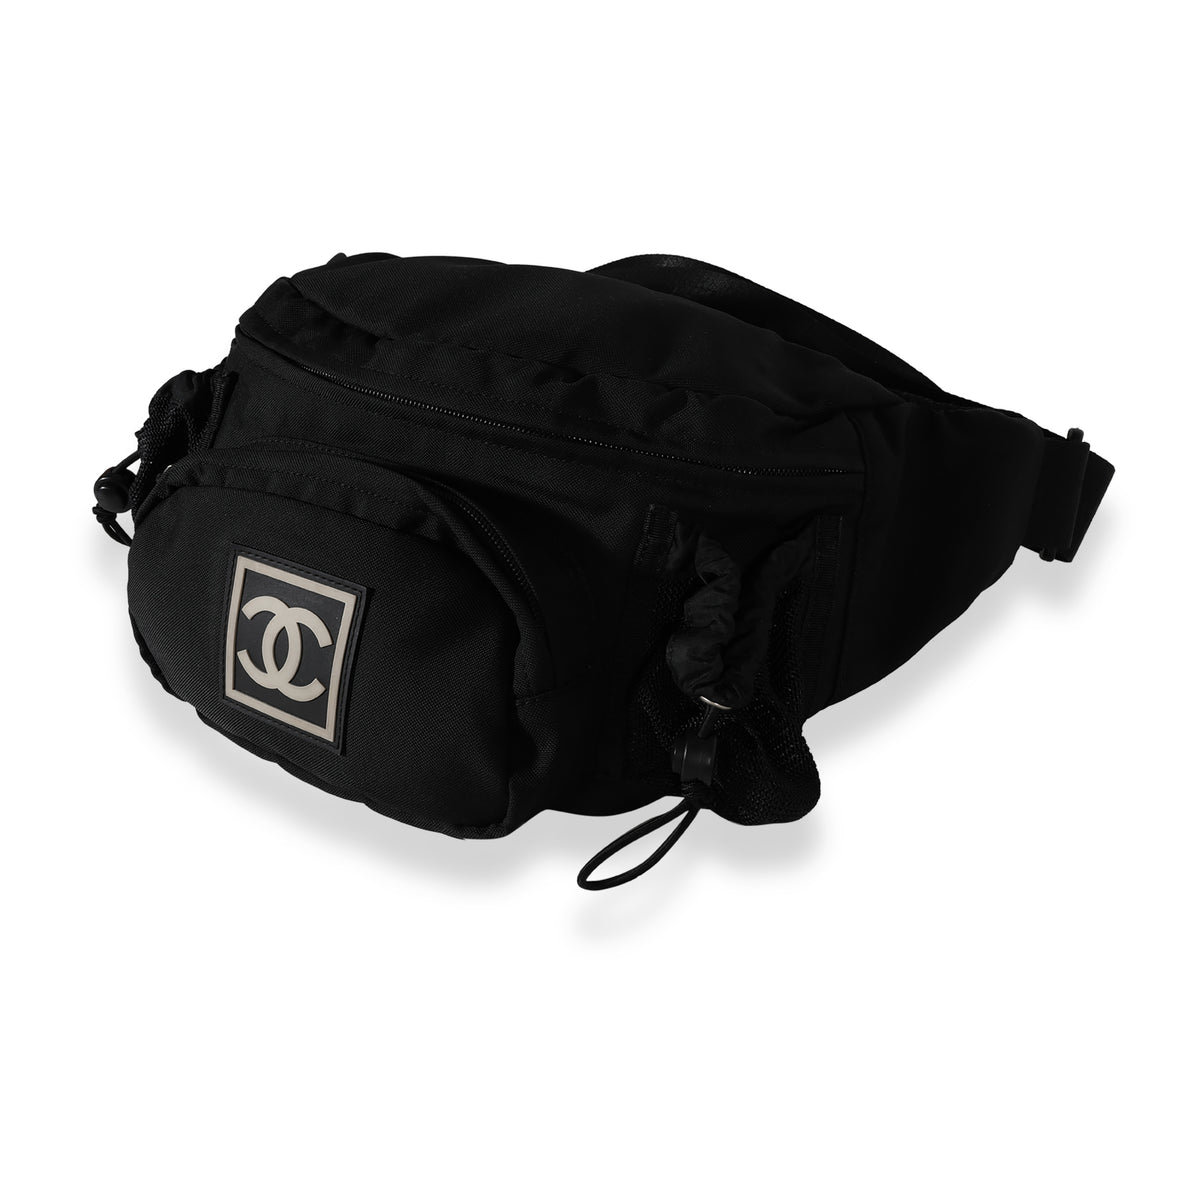 Chanel XL Oversized Fanny Pack Sling Gym Sport Black Nylon Cross Body Bag